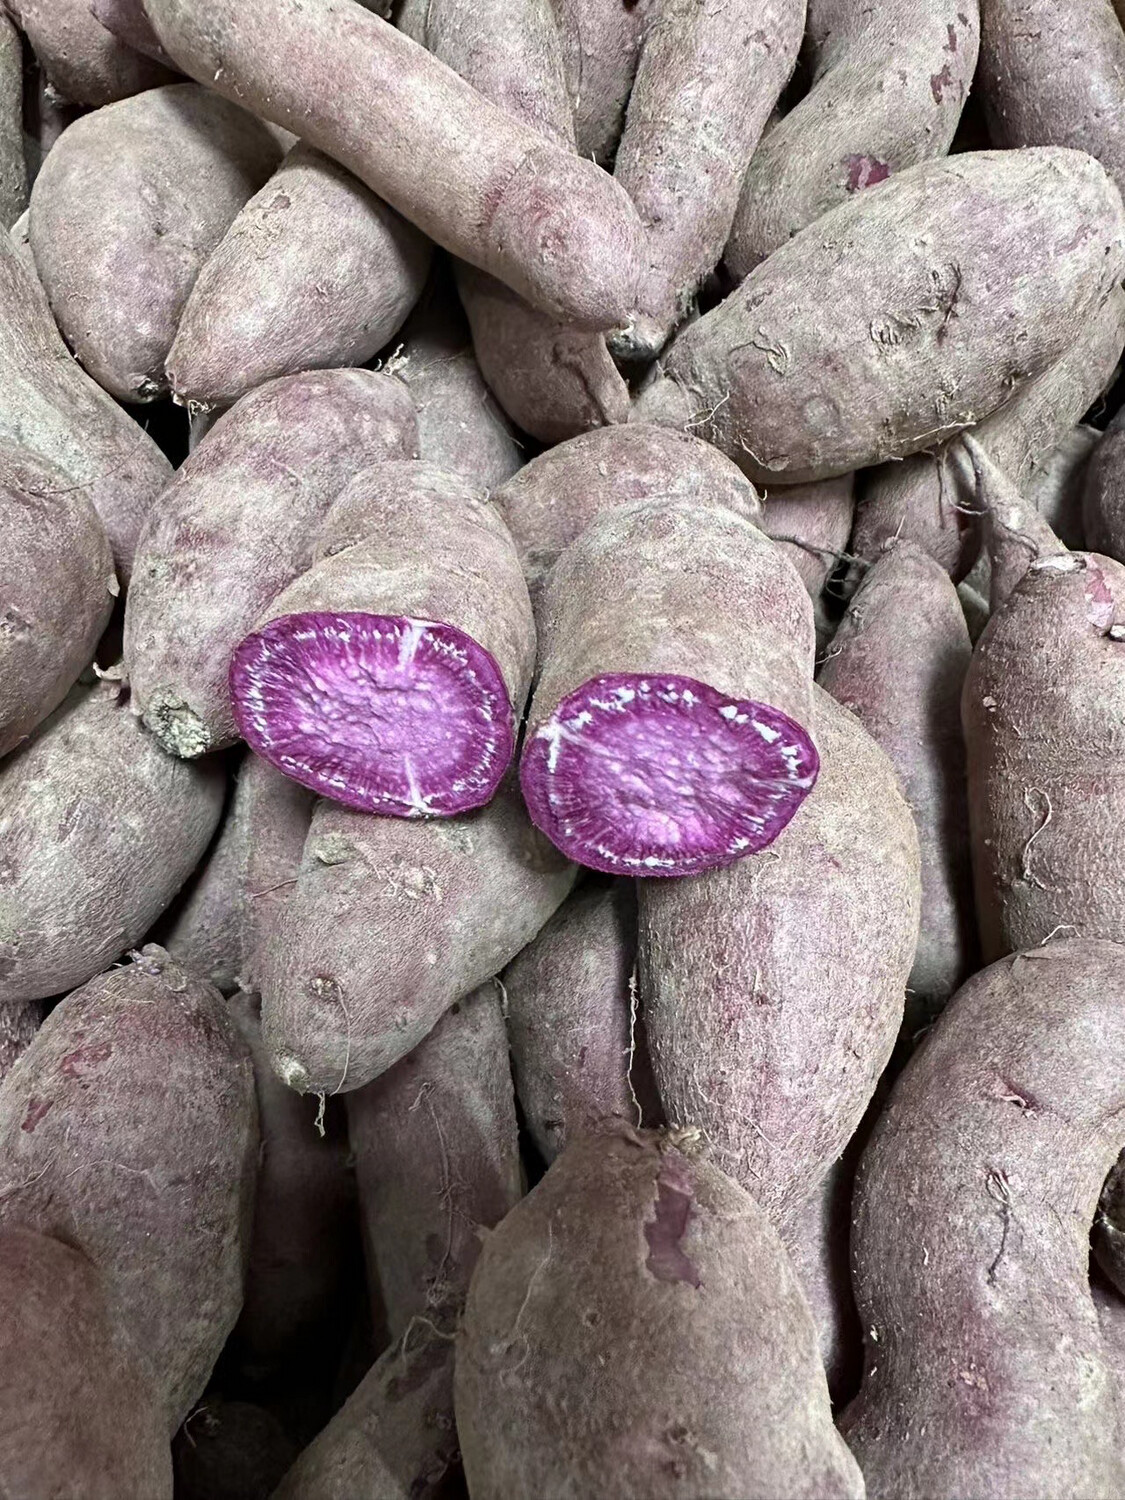 Purple Yam 加州紫薯